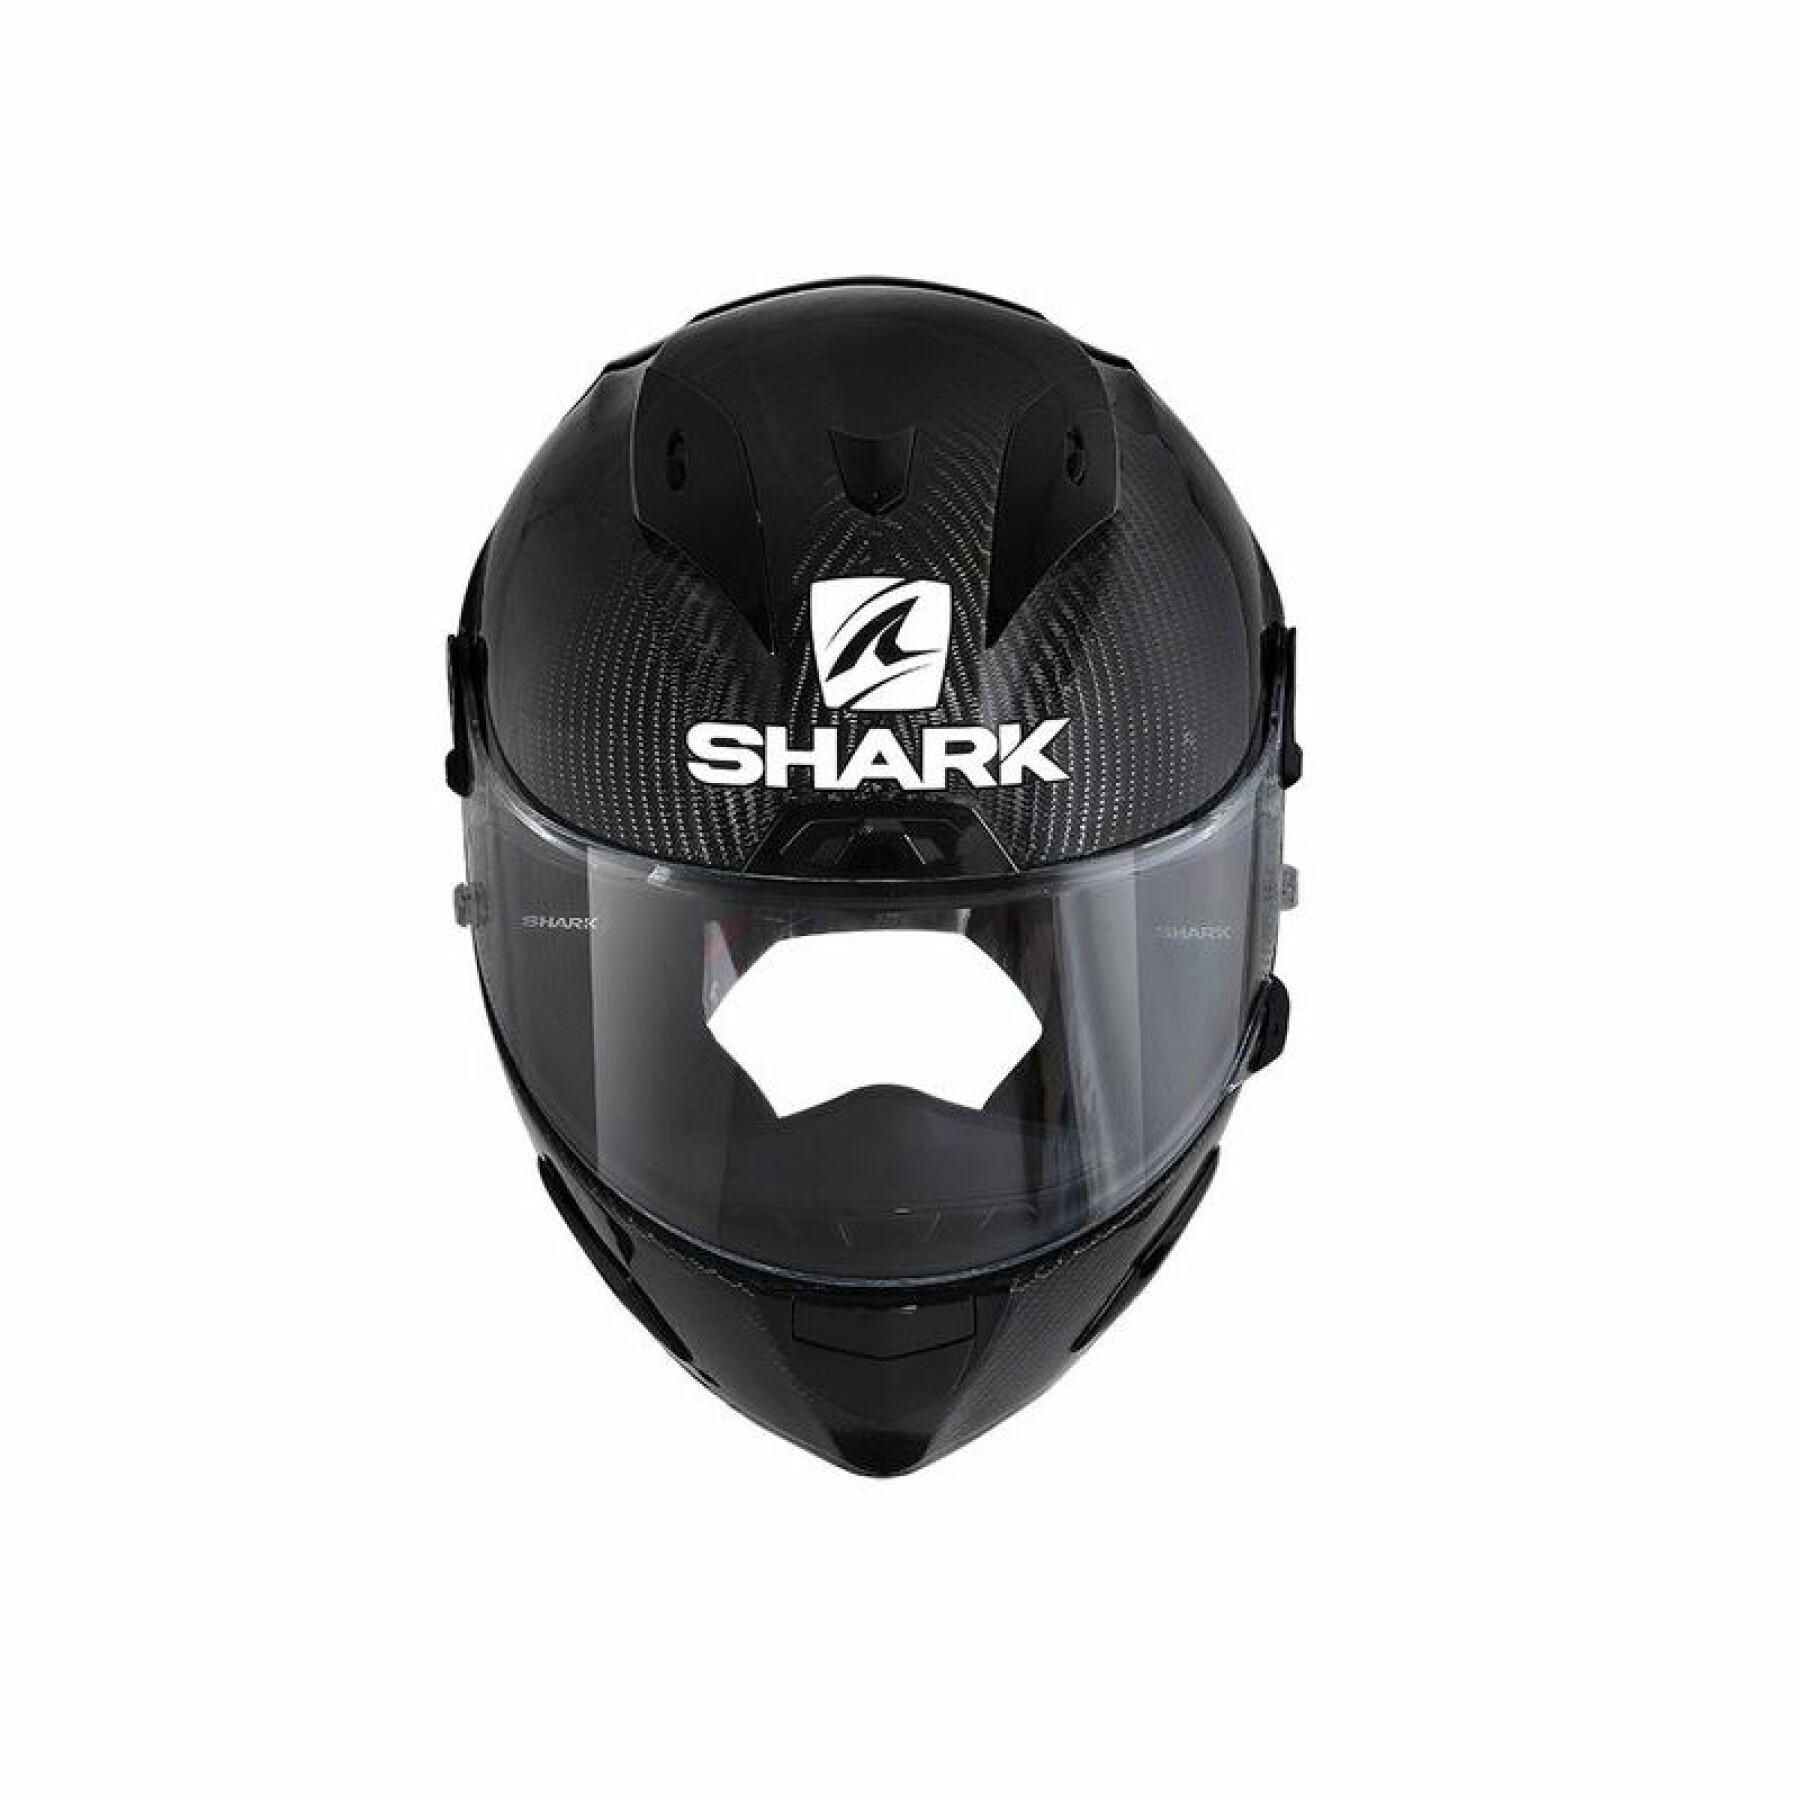 Full face motorcycle helmet Shark race-r pro GP fim racing #1 2019